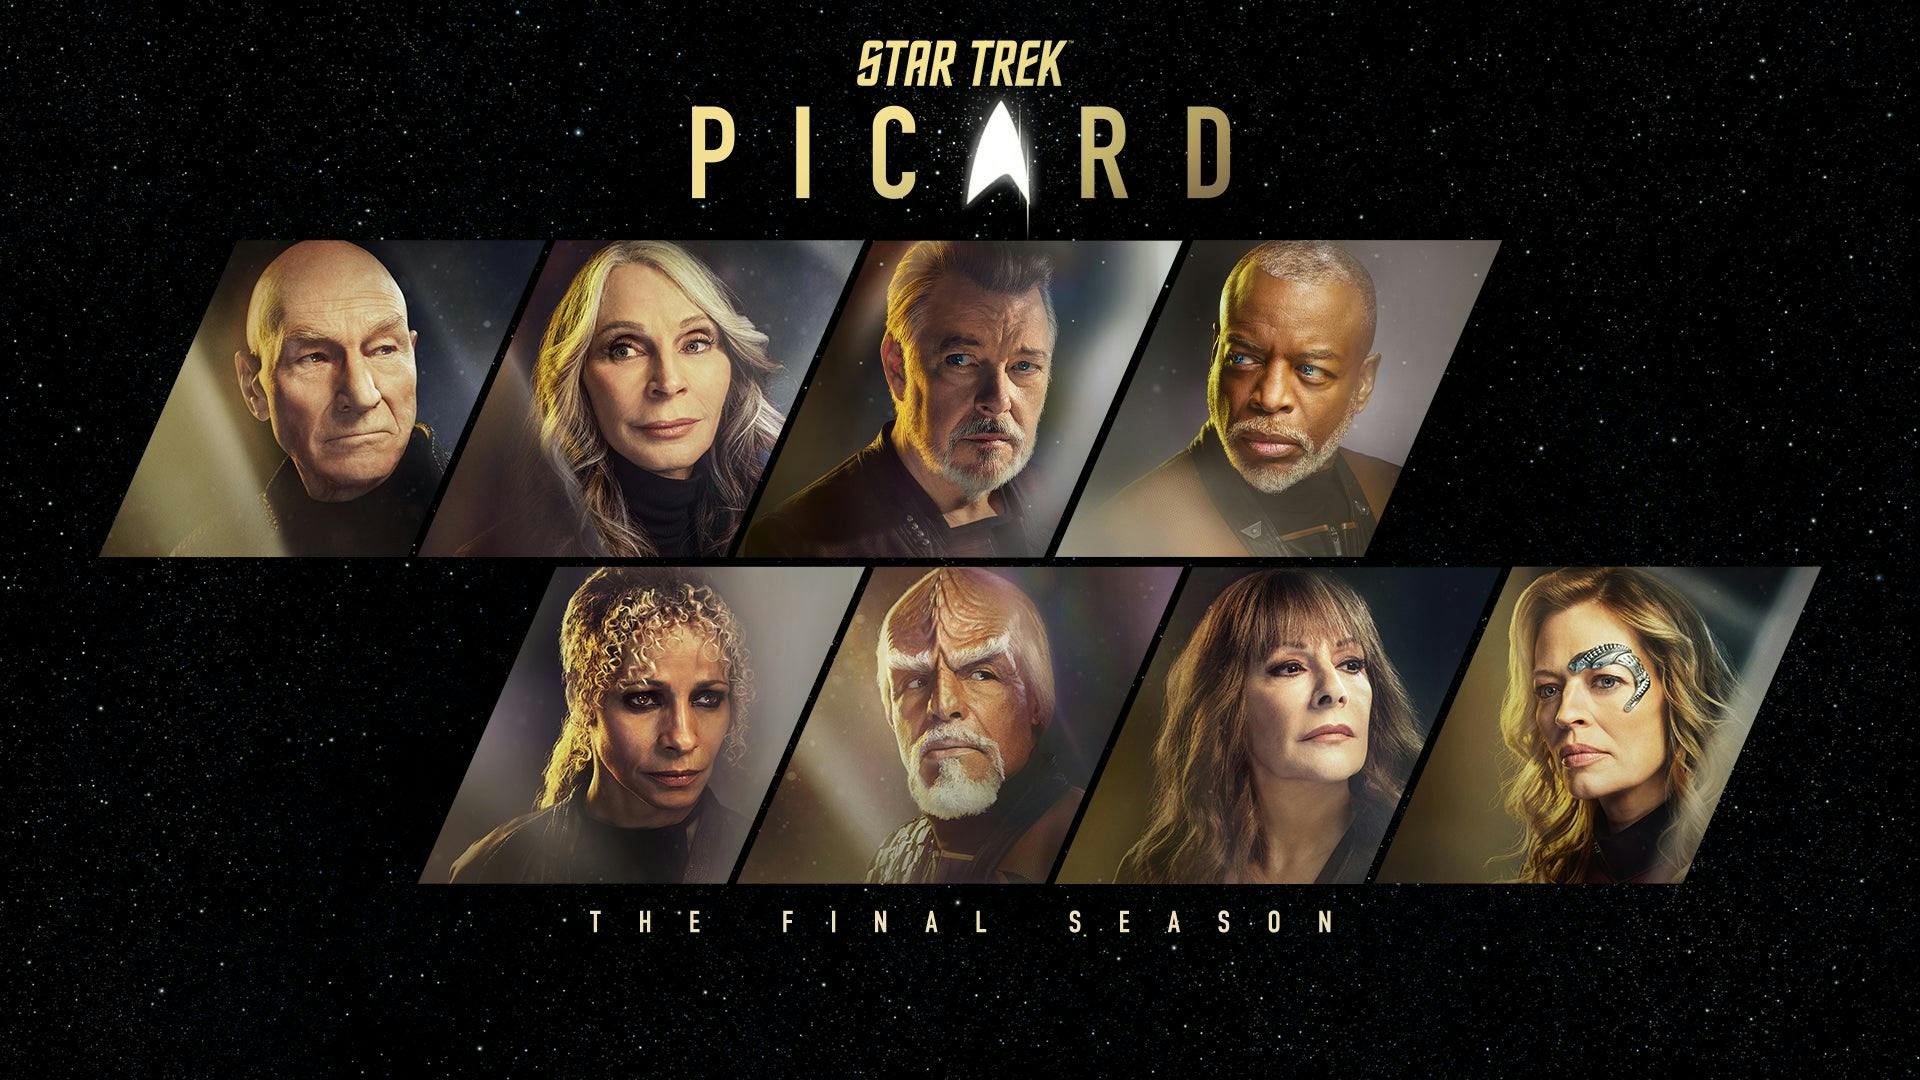 Star Trek: Picard - Paramount+ Series - Where To Watch